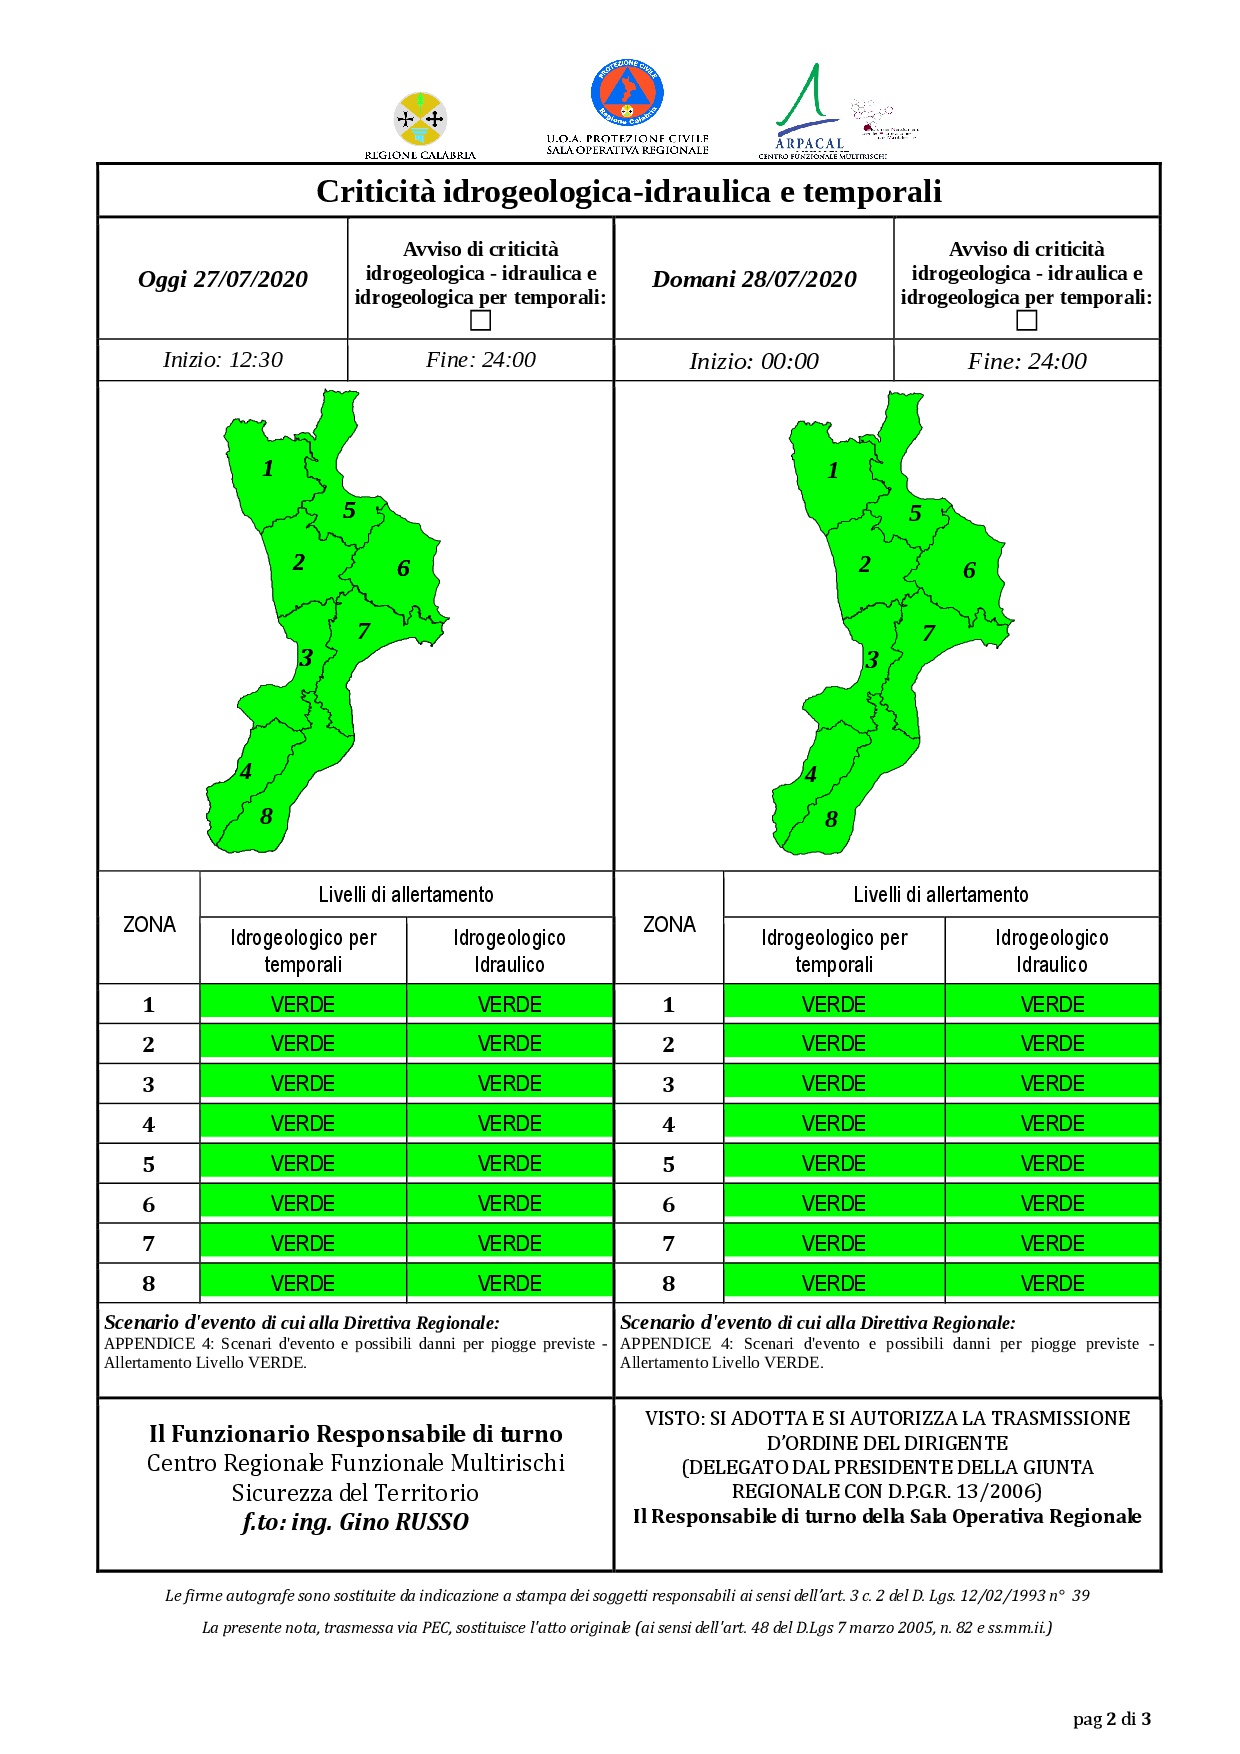 Criticità idrogeologica-idraulica e temporali in Calabria 27-07-2020